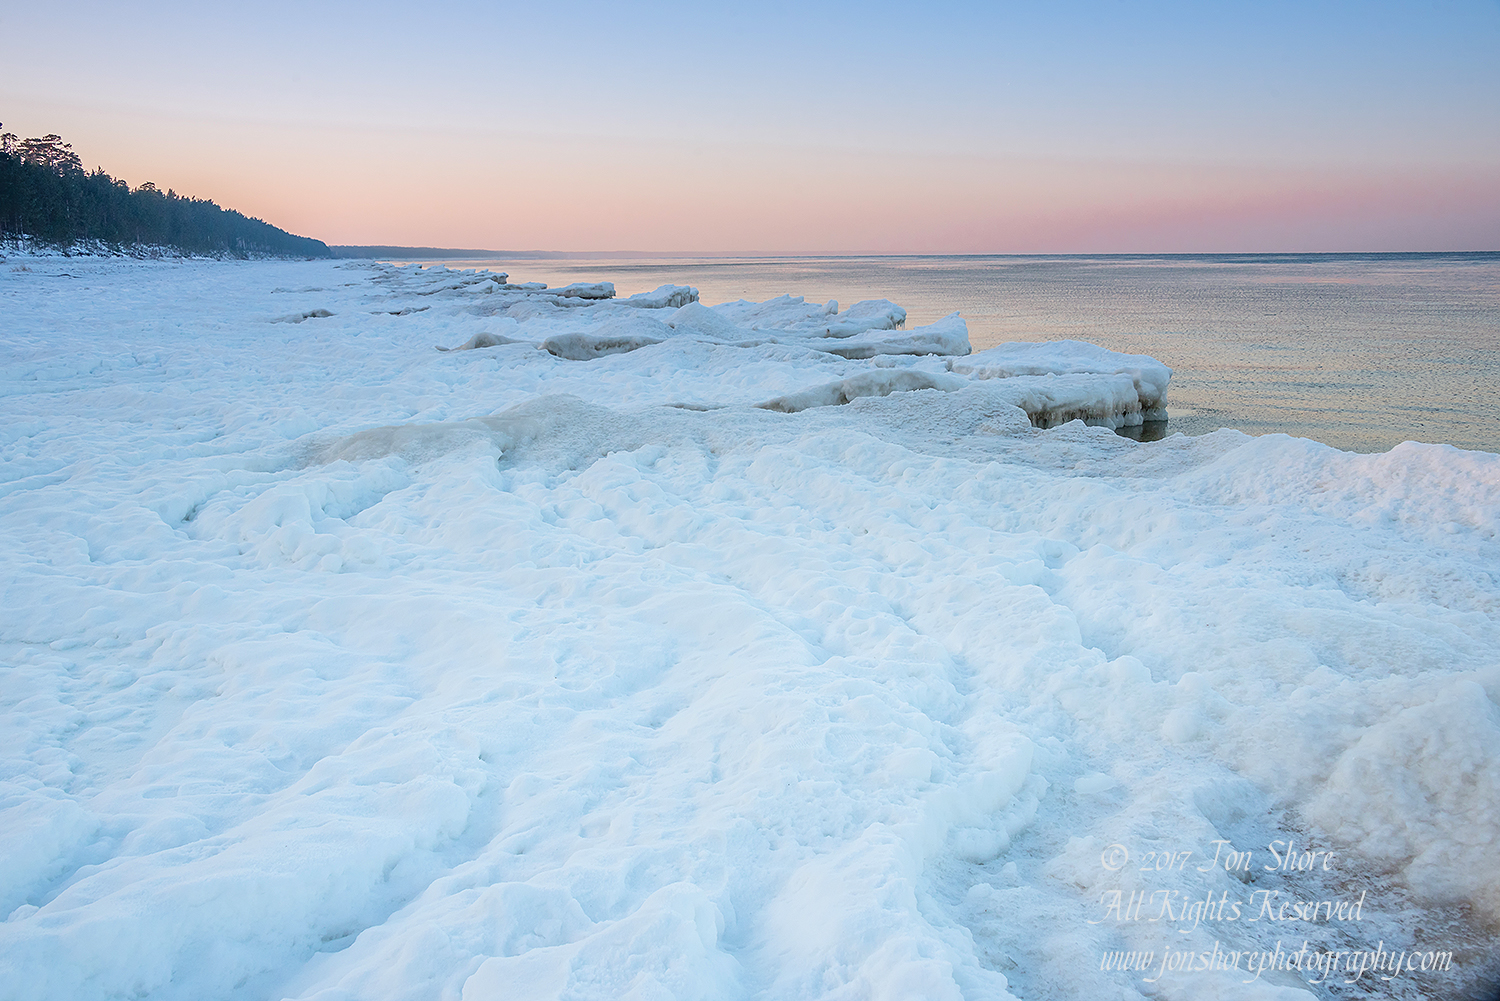 Winter at a Frozen Baltic Sea Beach. Nikkor 50mm